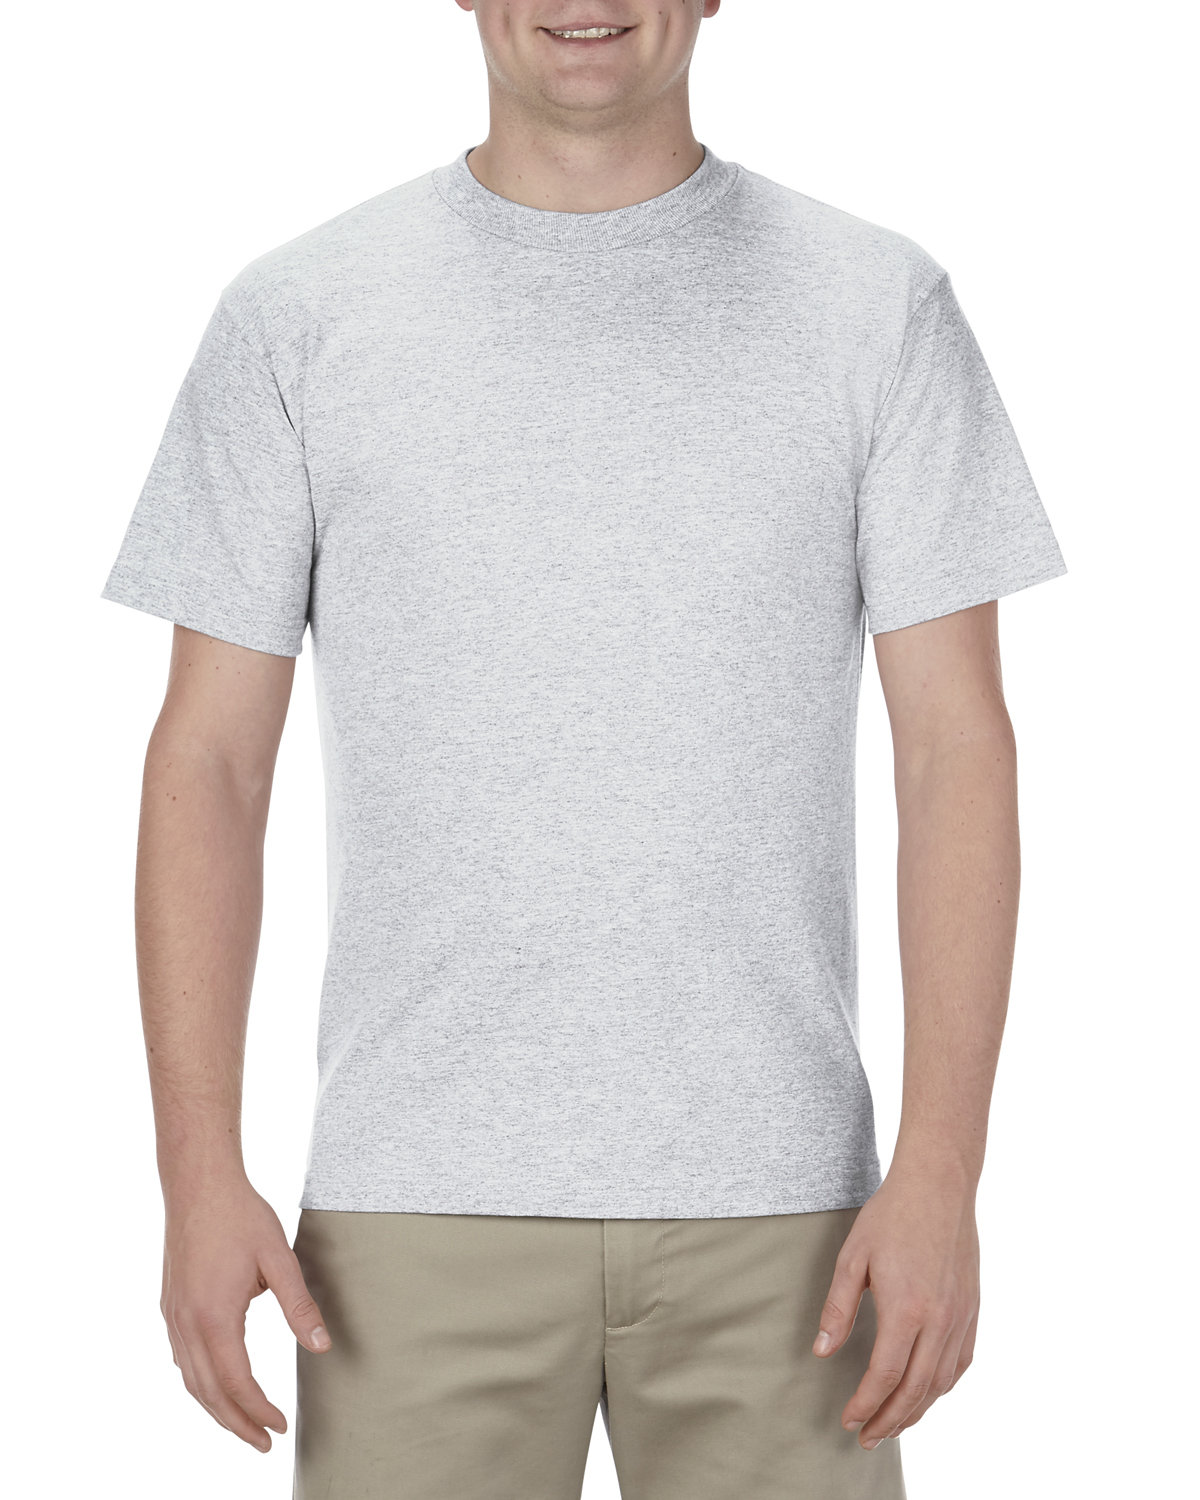 American Apparel Unisex Heavyweight Cotton T-Shirt ash grey 